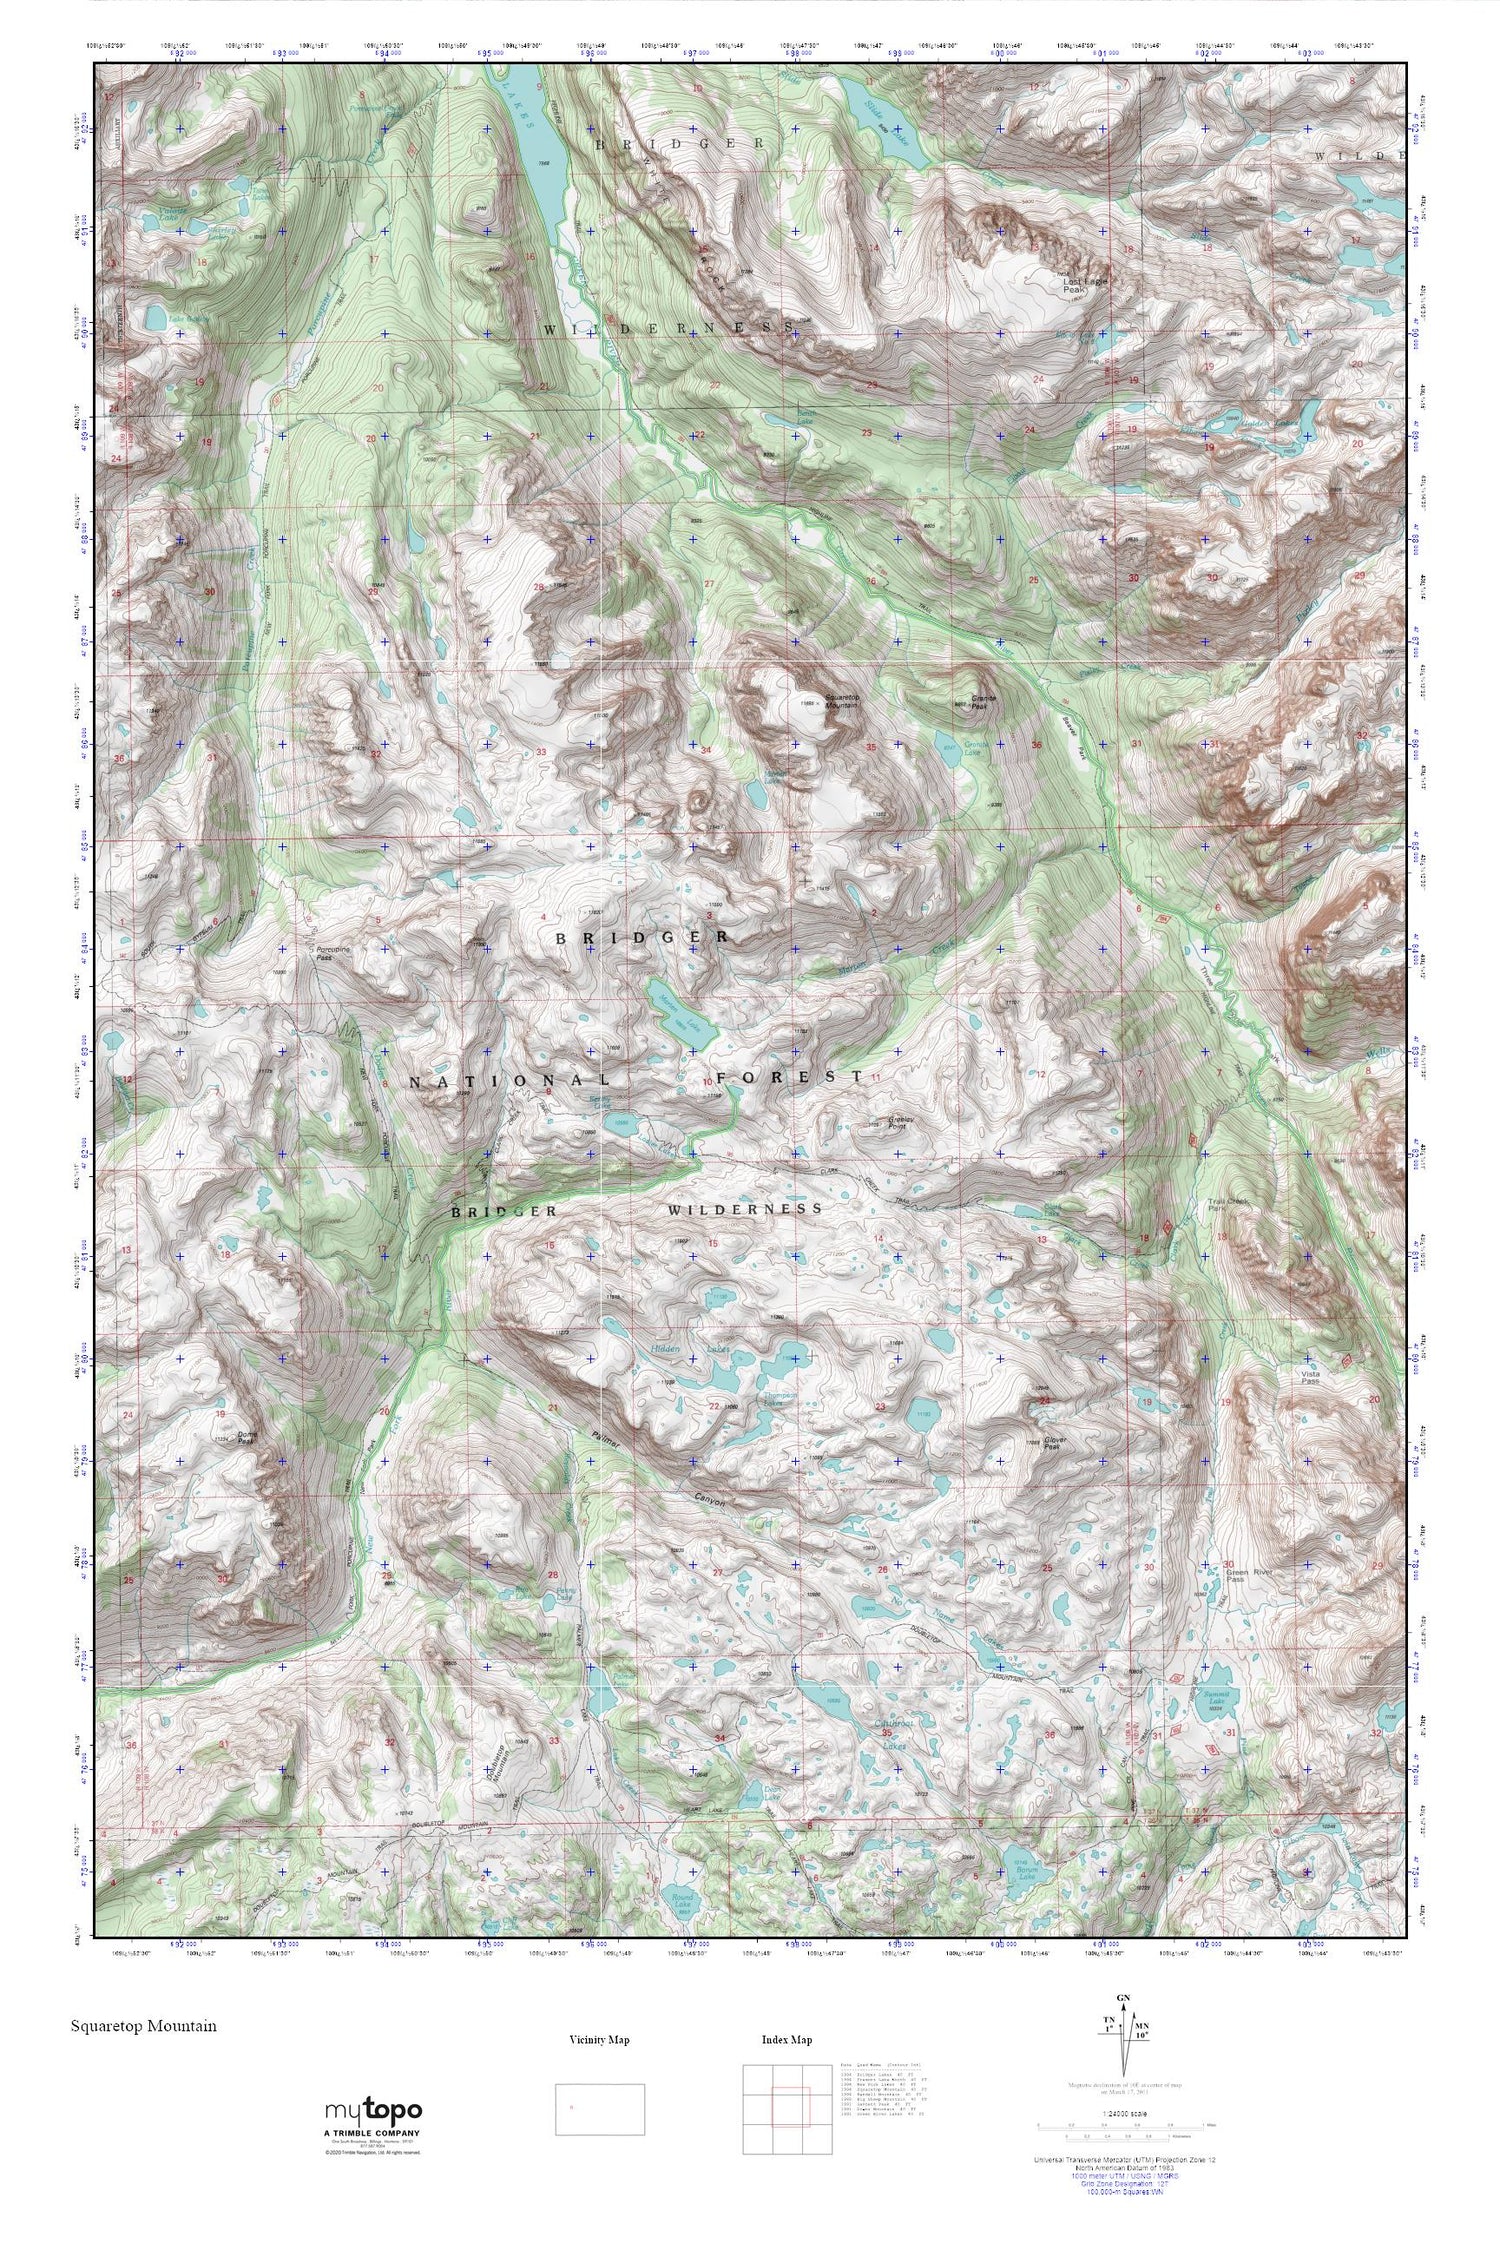 Squaretop Mountain MyTopo Explorer Series Map Image